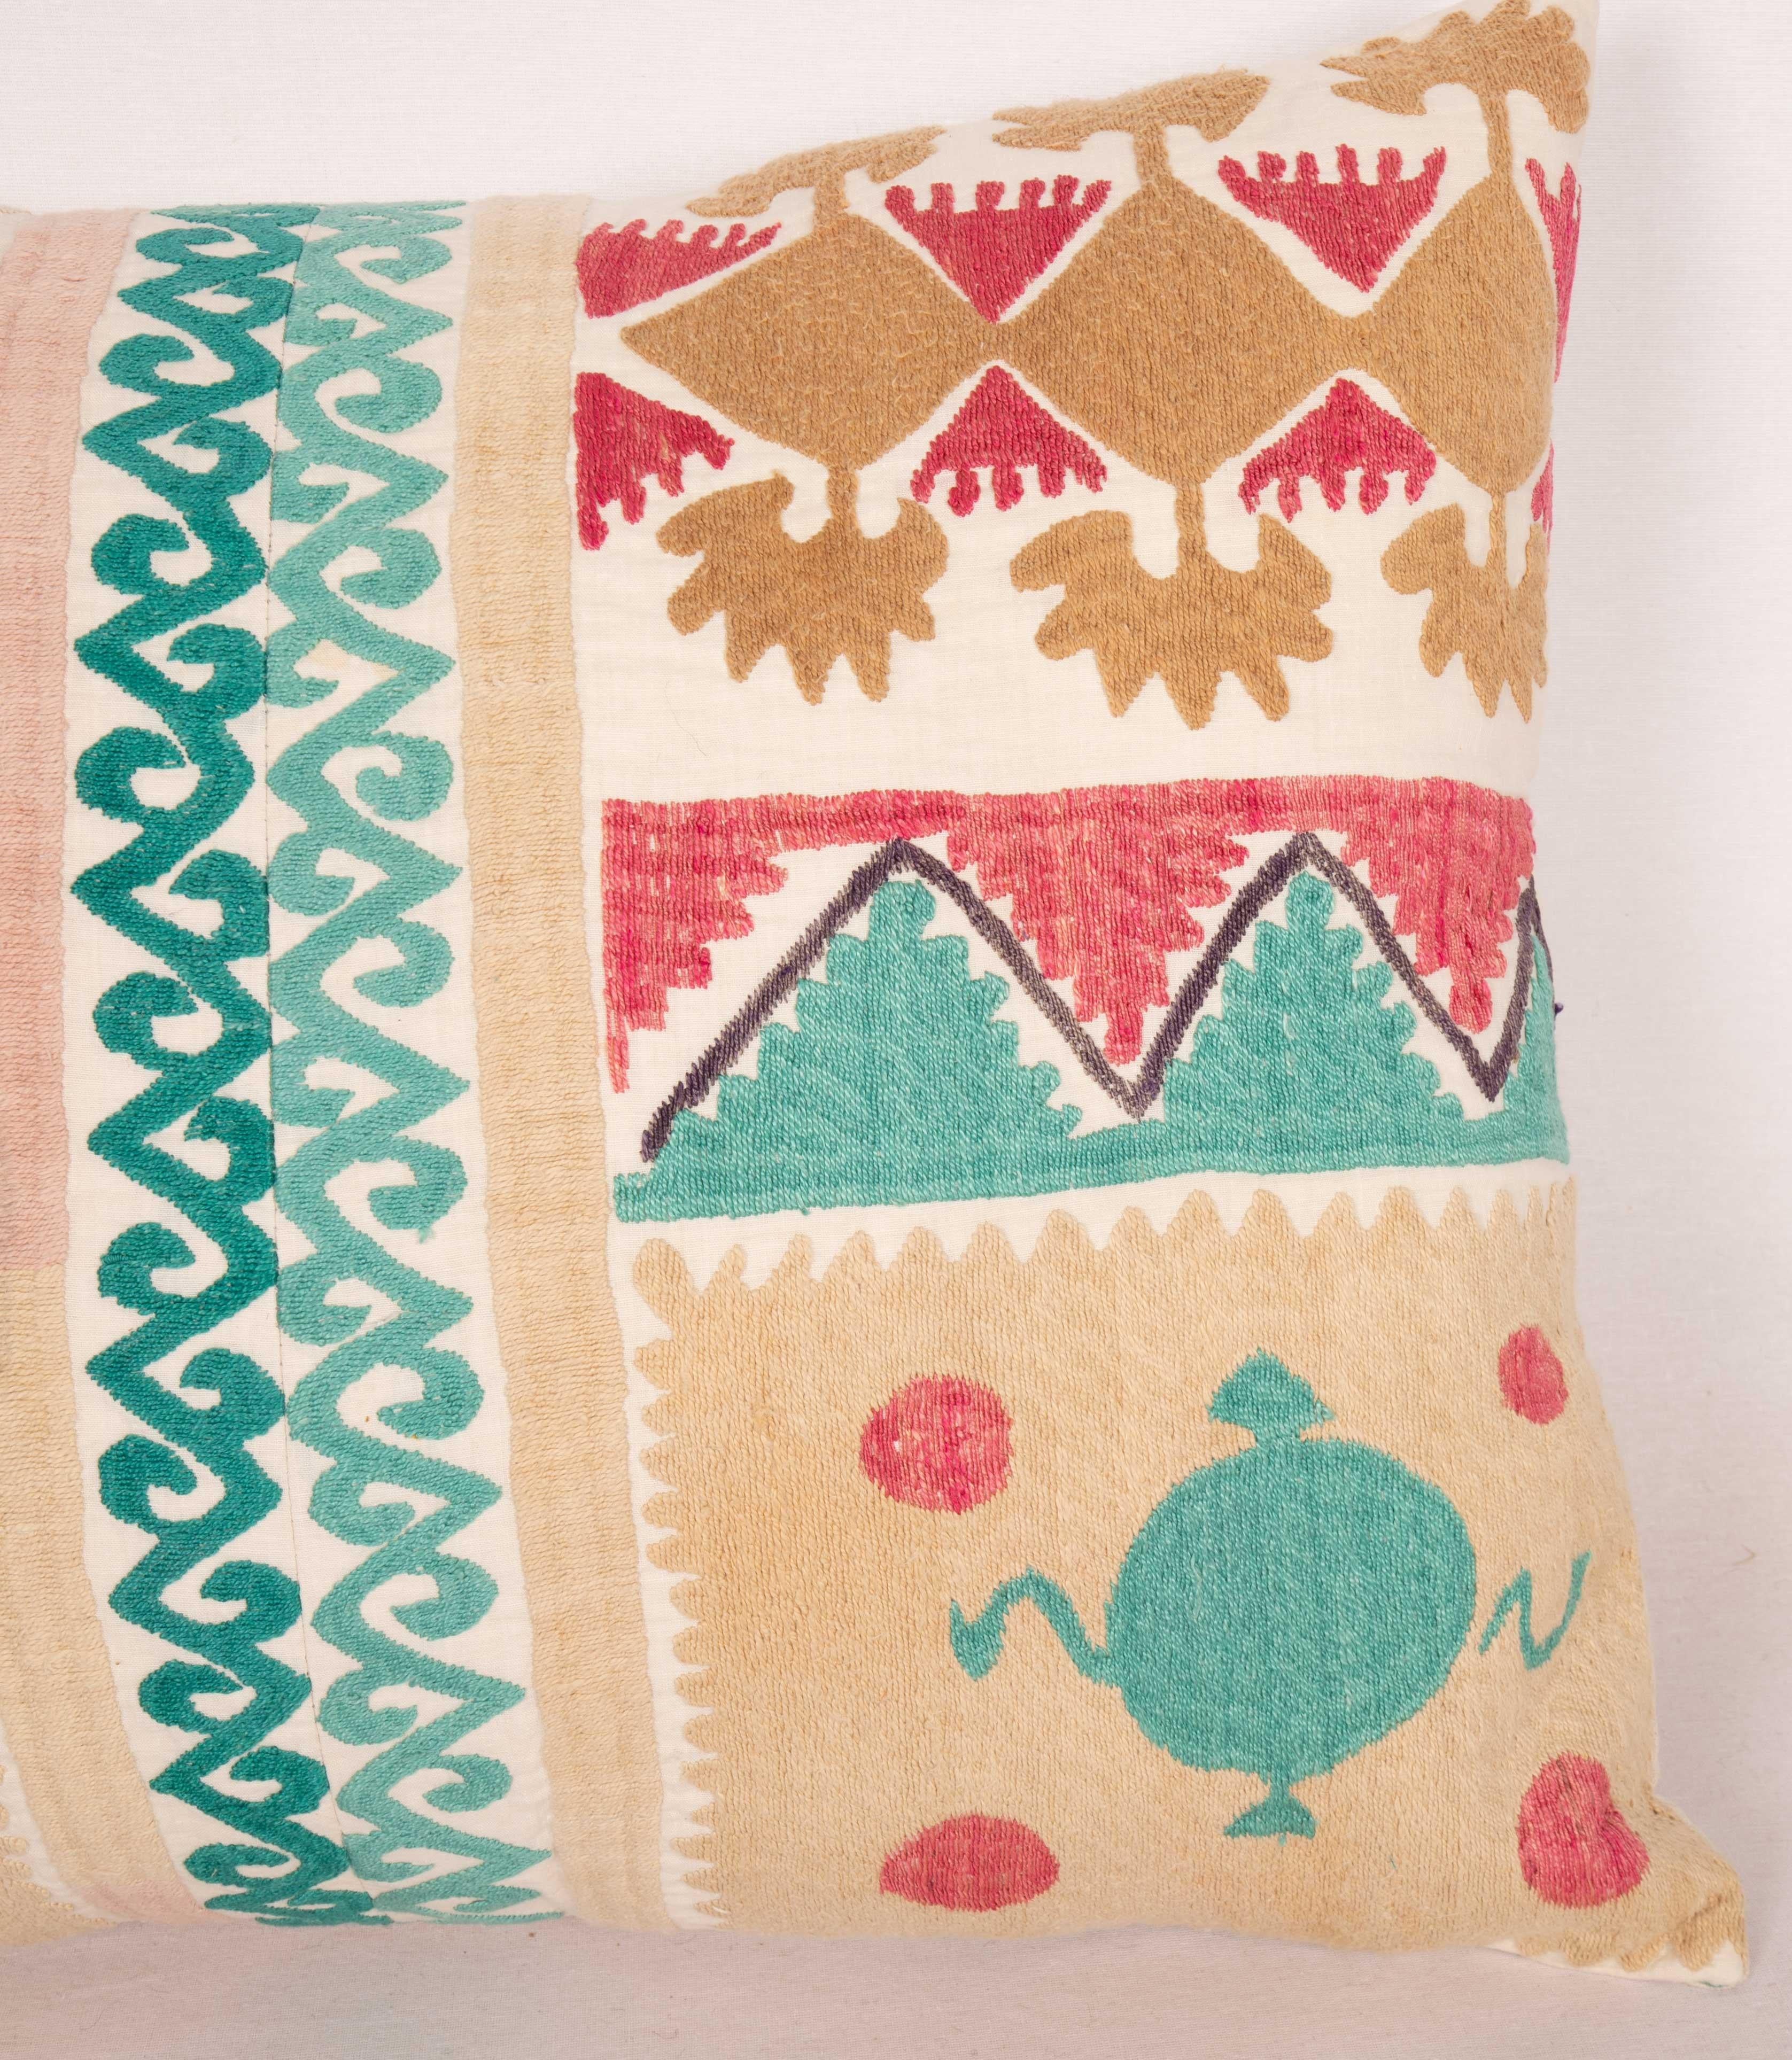 Embroidered Mid-20th Century Suzani Pillowcase Made from a Samarkand Suzani